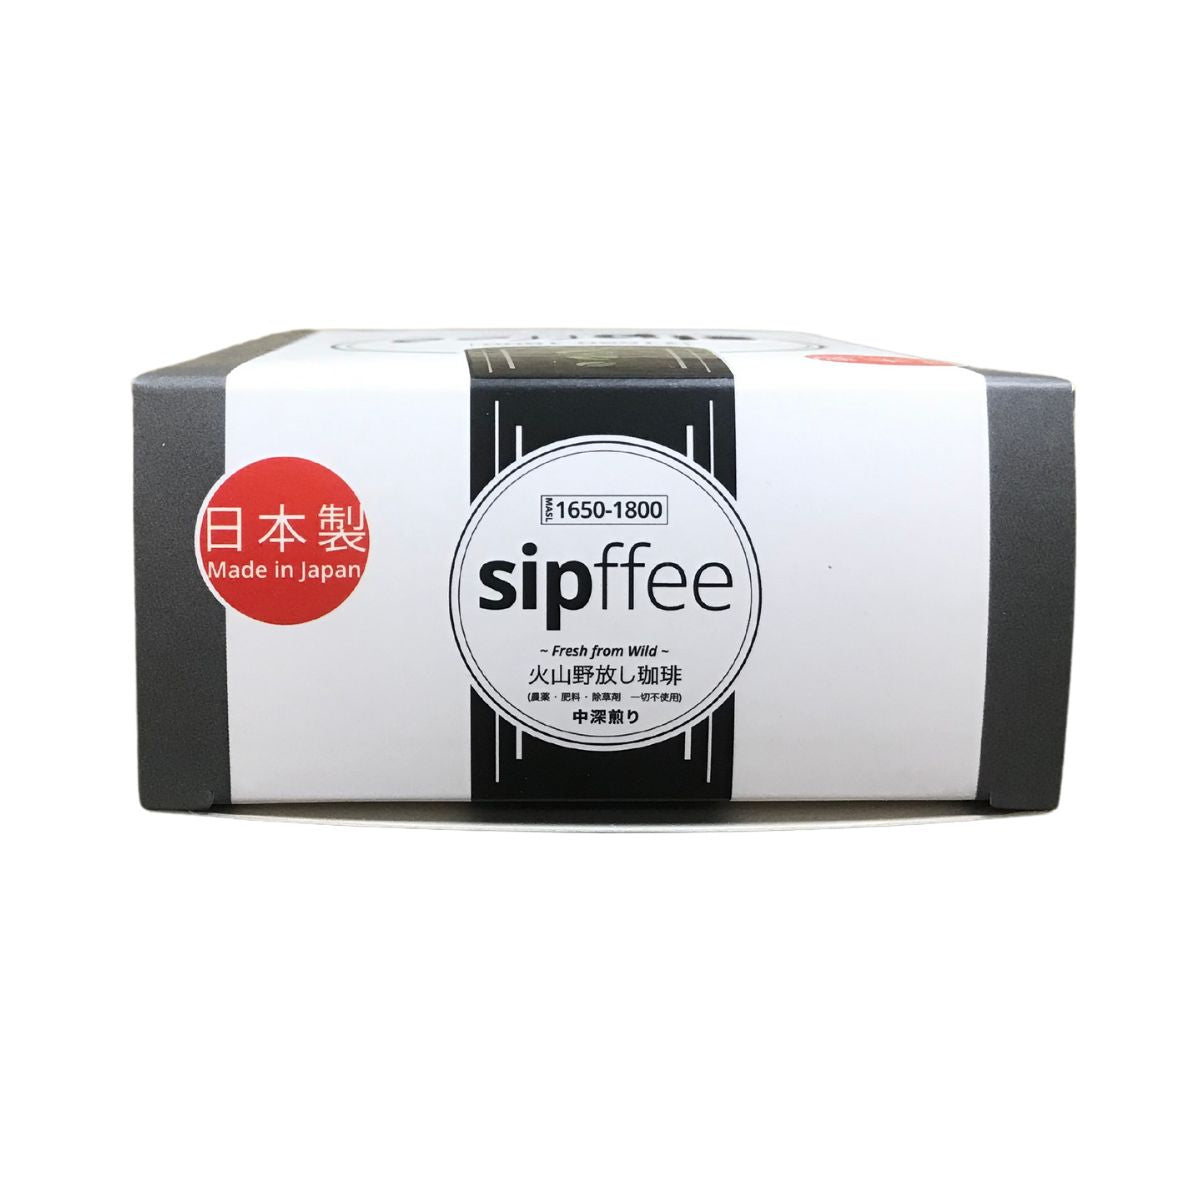 Sipffee 火山野放1650掛耳包 (5包盒裝) 日本製造